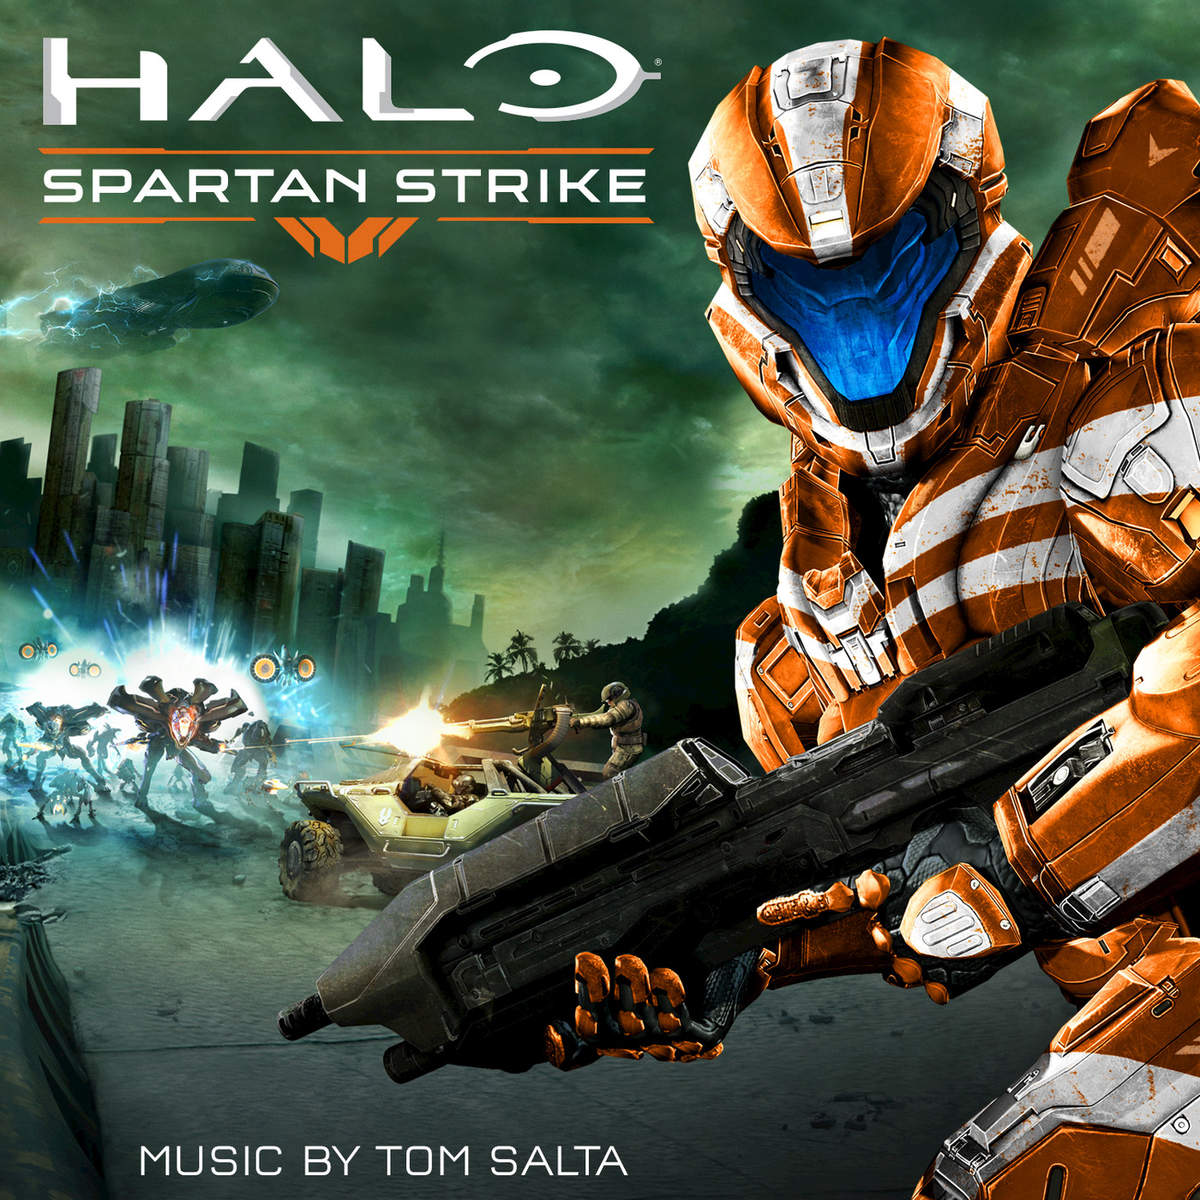 Halo Spartan Strike Original Soundtrack Music Halopedia, the Halo wiki